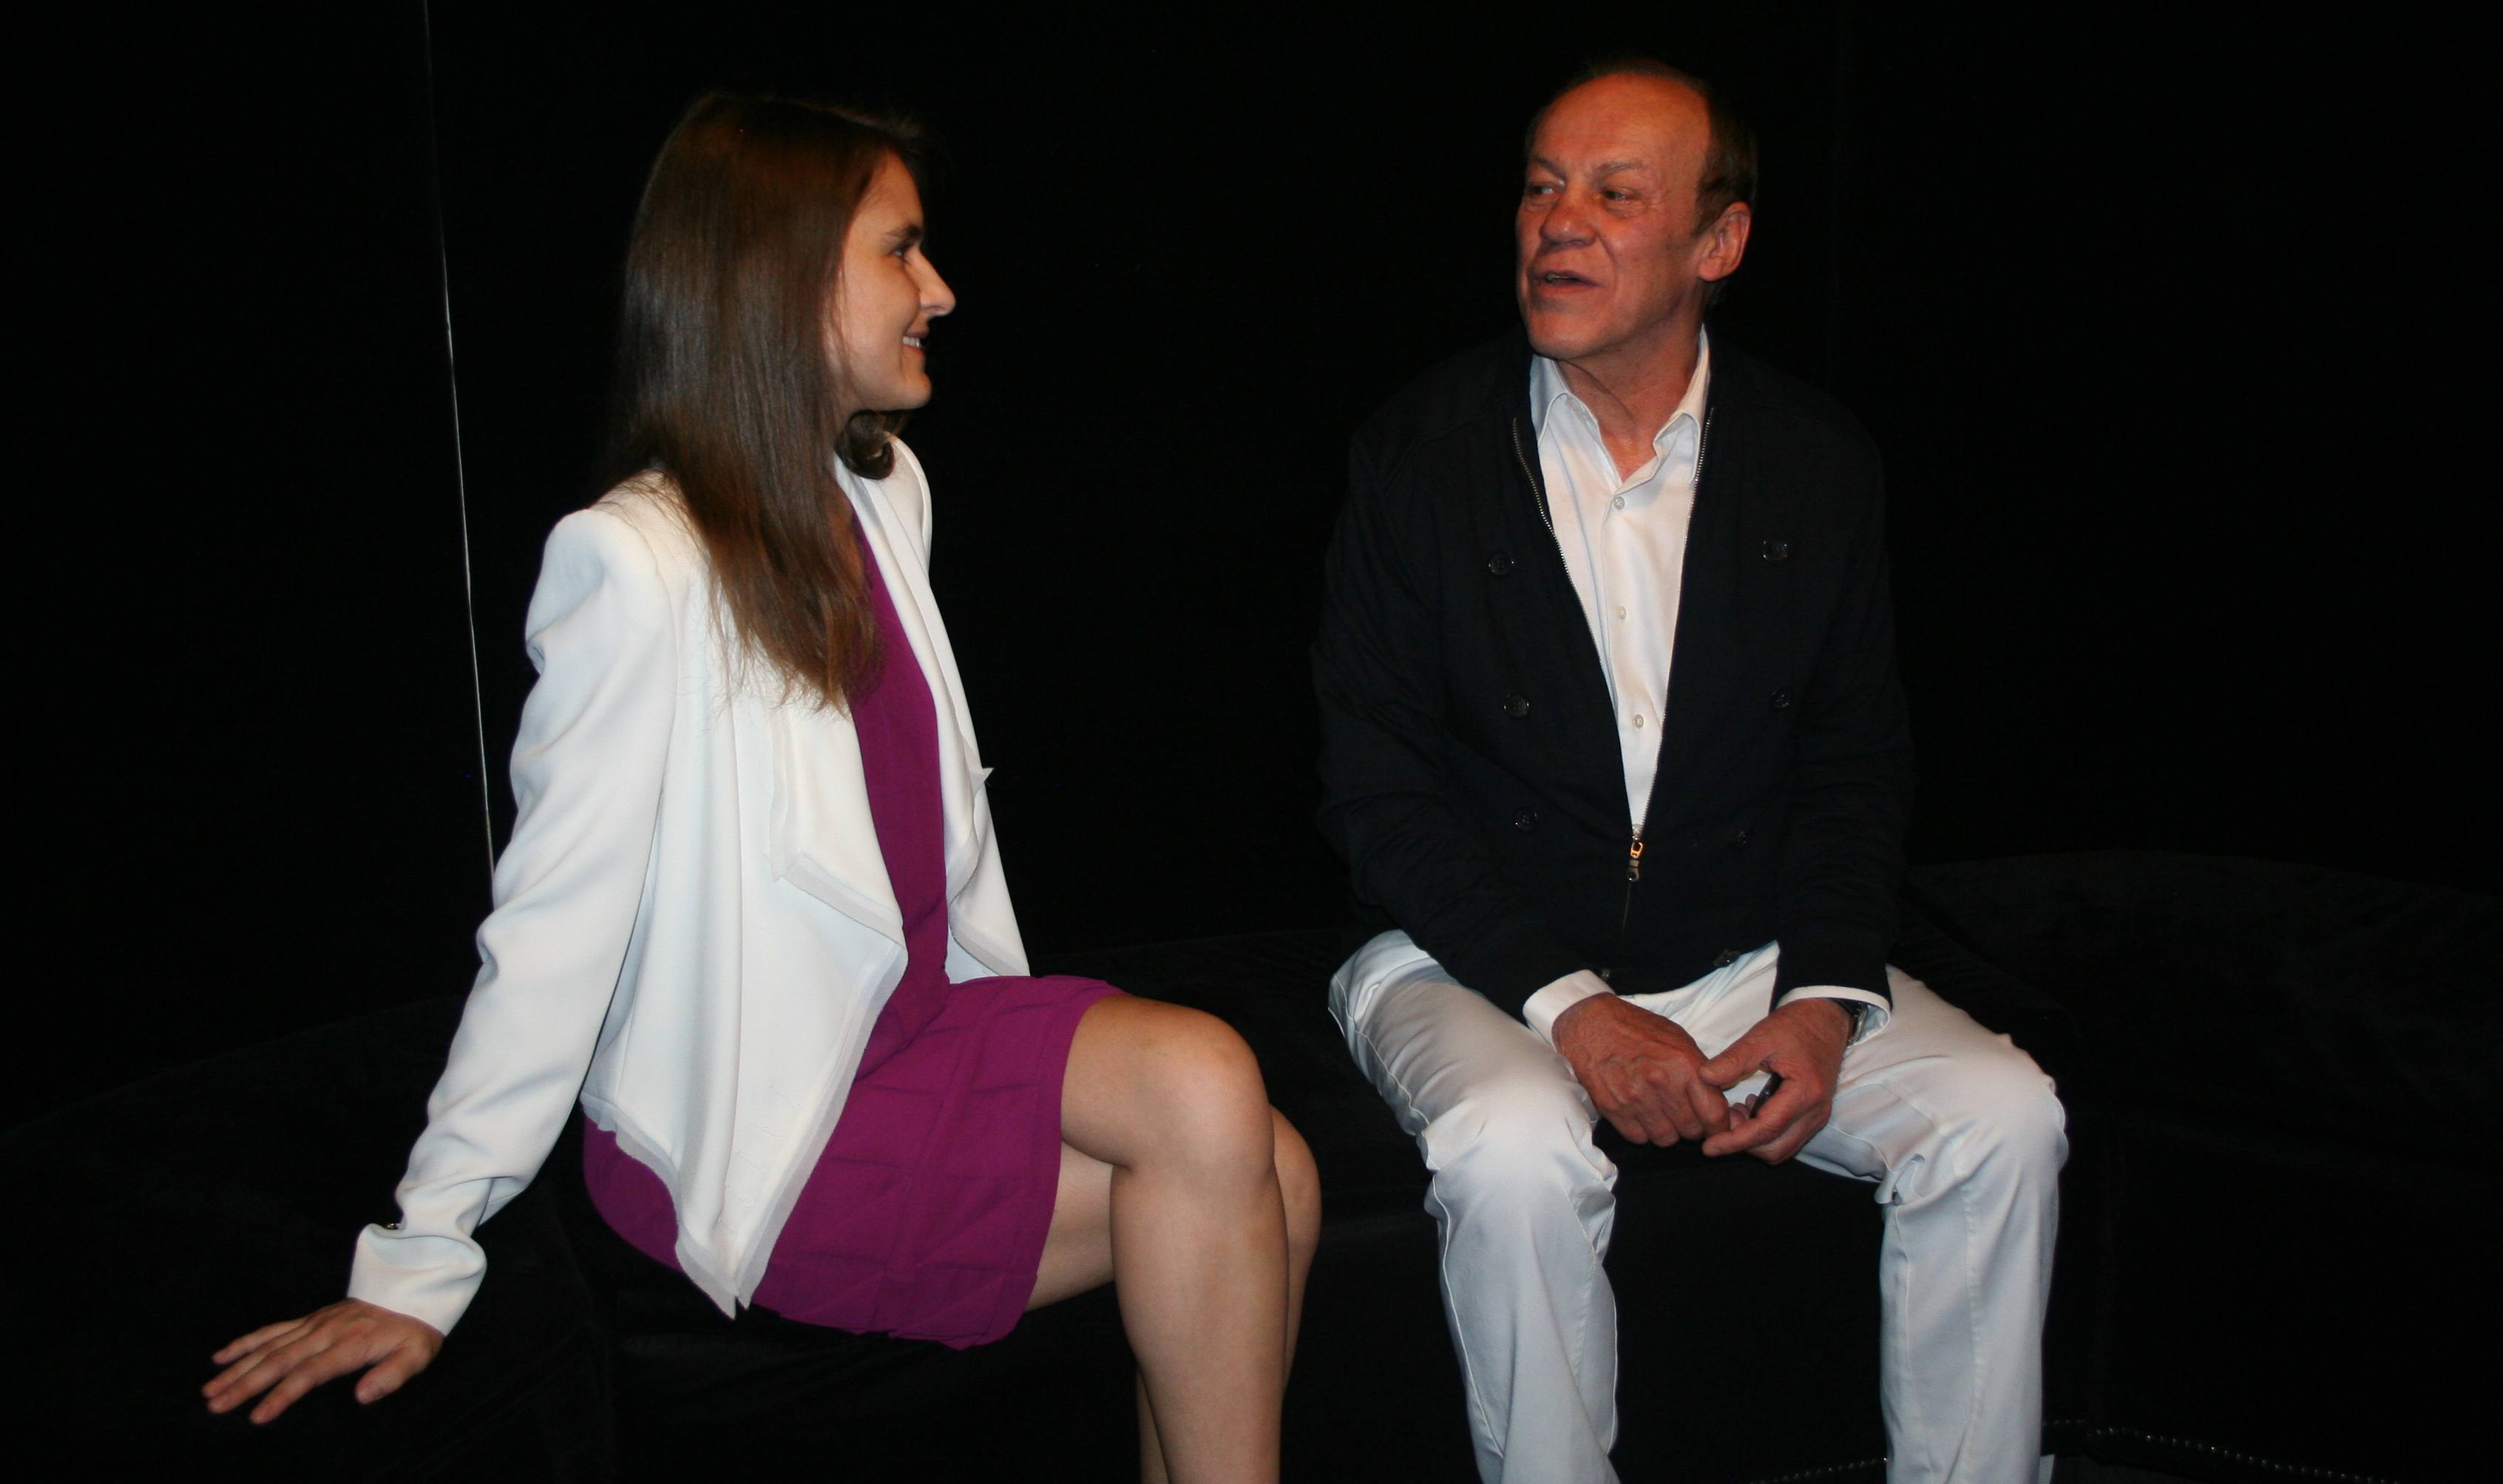 Bruno Pischiutta and Producer Daria Trifu - interview during the 2013 edition of the Brasov International Film Festival & Market (www.brasovfilmfestival.com)